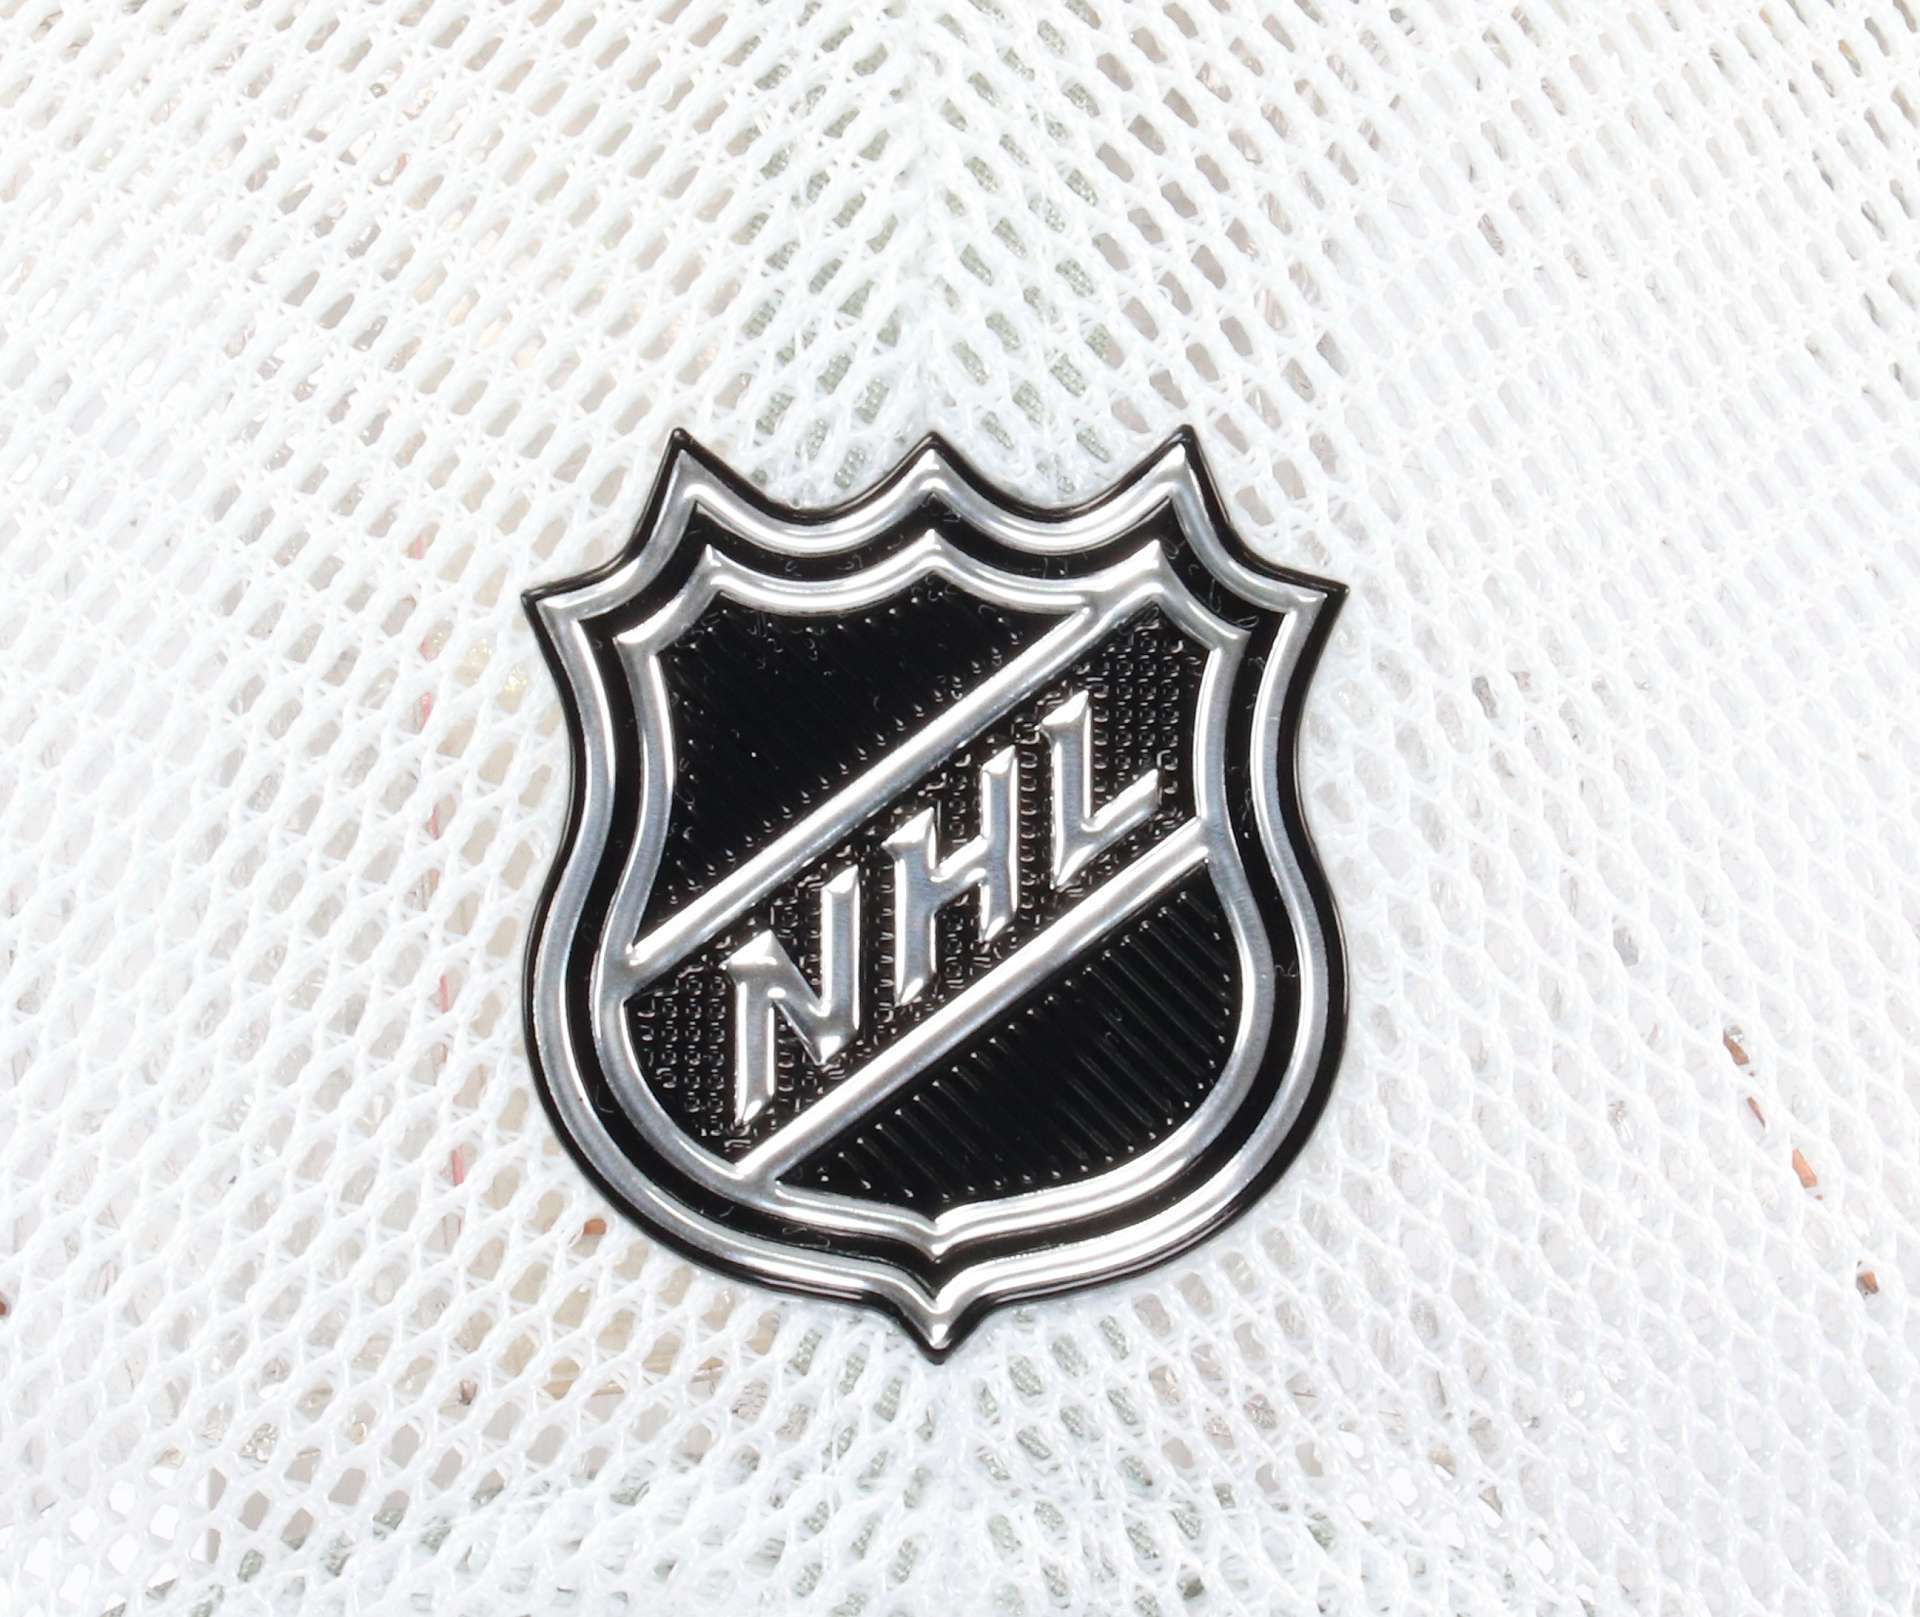 San Jose Sharks NHL Authentic Pro Draft Jersey Hook Structured Trucker Cap Fanatics